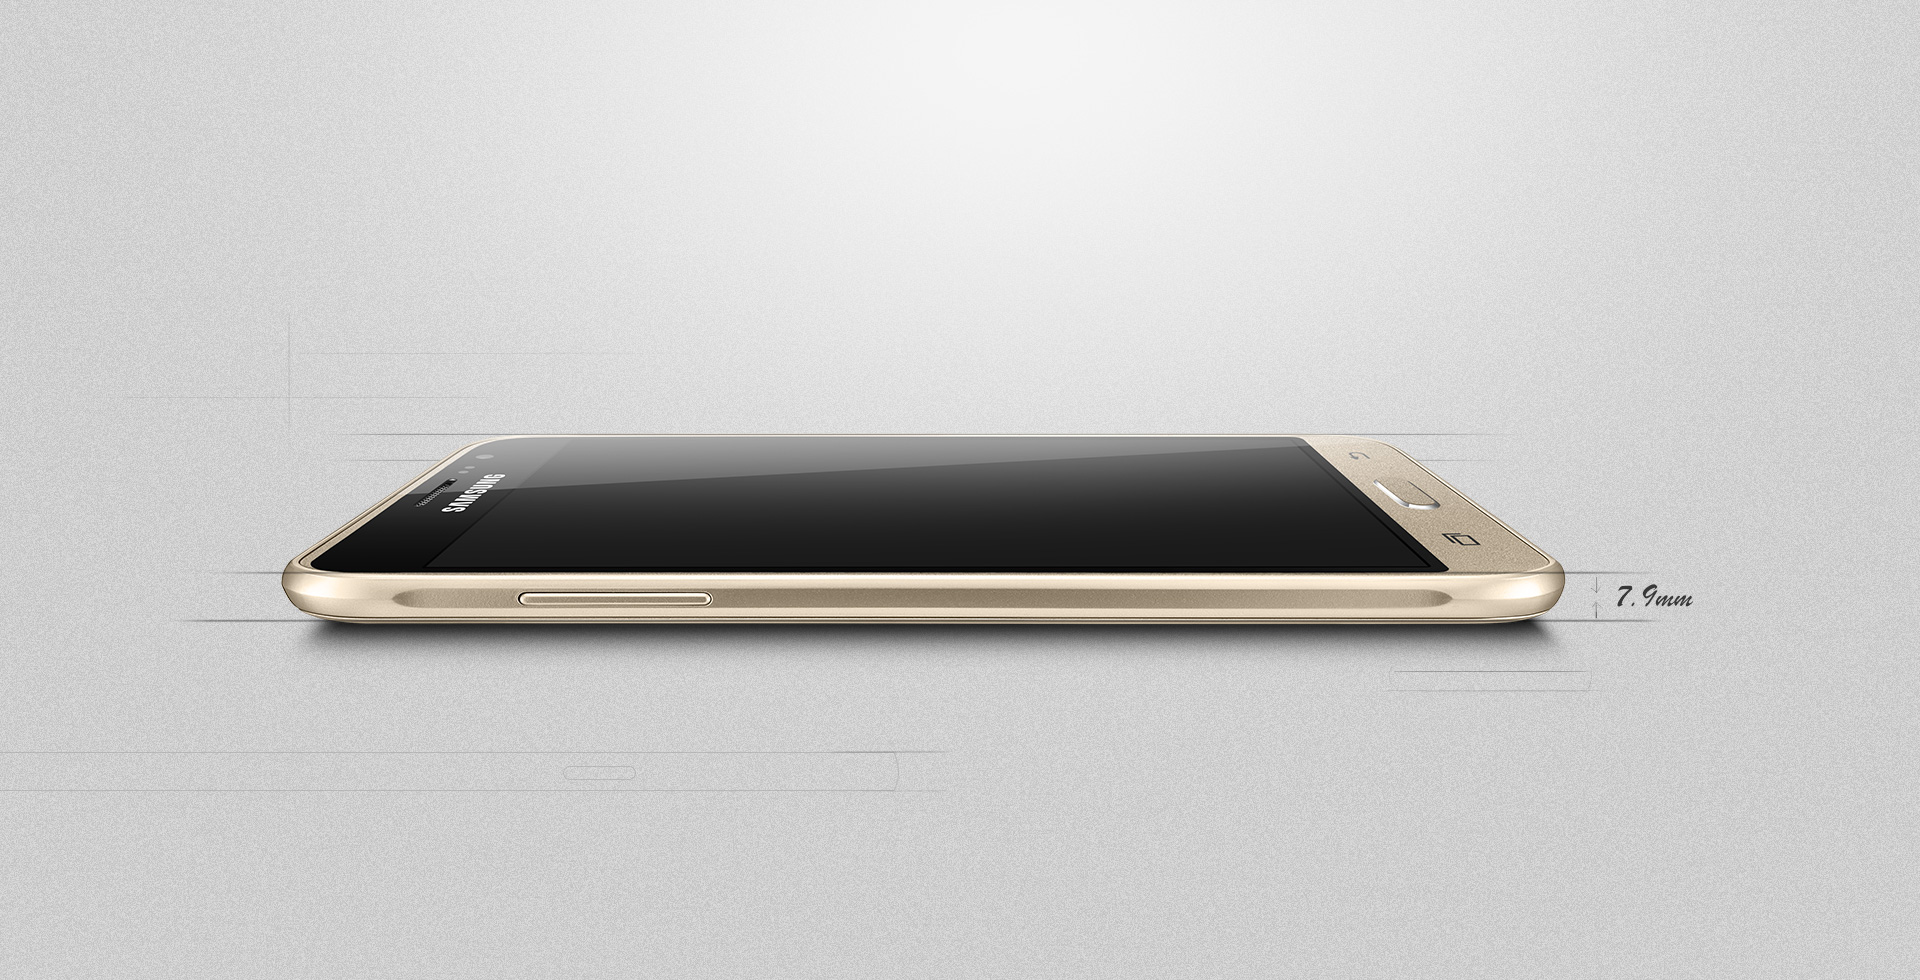 Samsung Galaxy J3 (6) with 5-inch Display